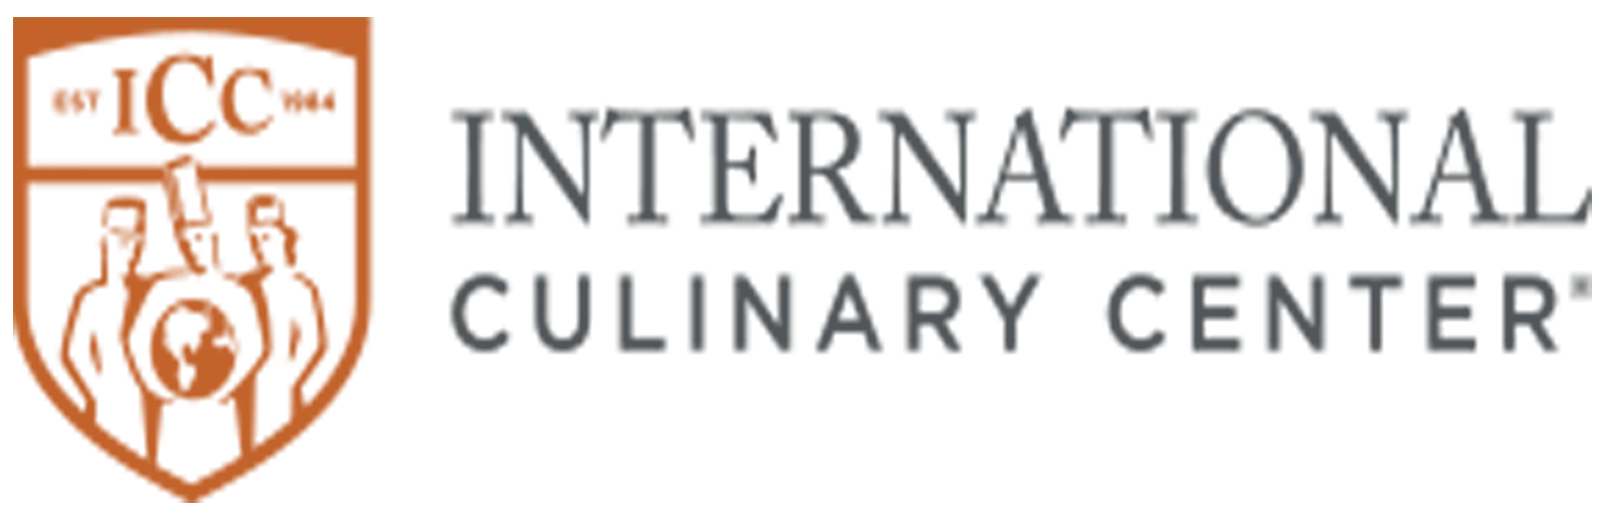  icc - International culinary center 